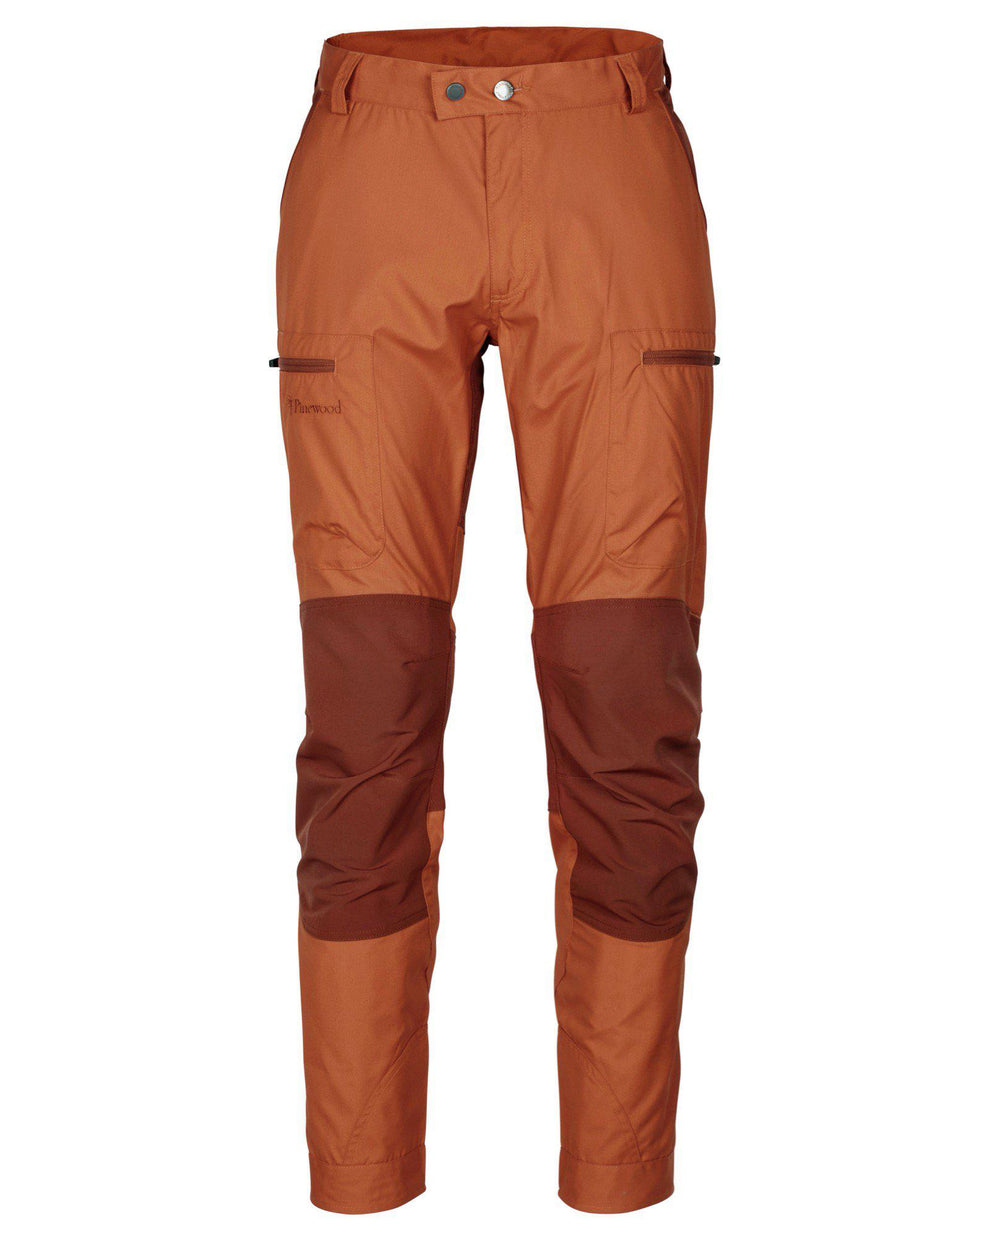 5085-831-01_Pinewood-Caribou-TC-Trousers-Mens_Burned-Orange-Terracotta